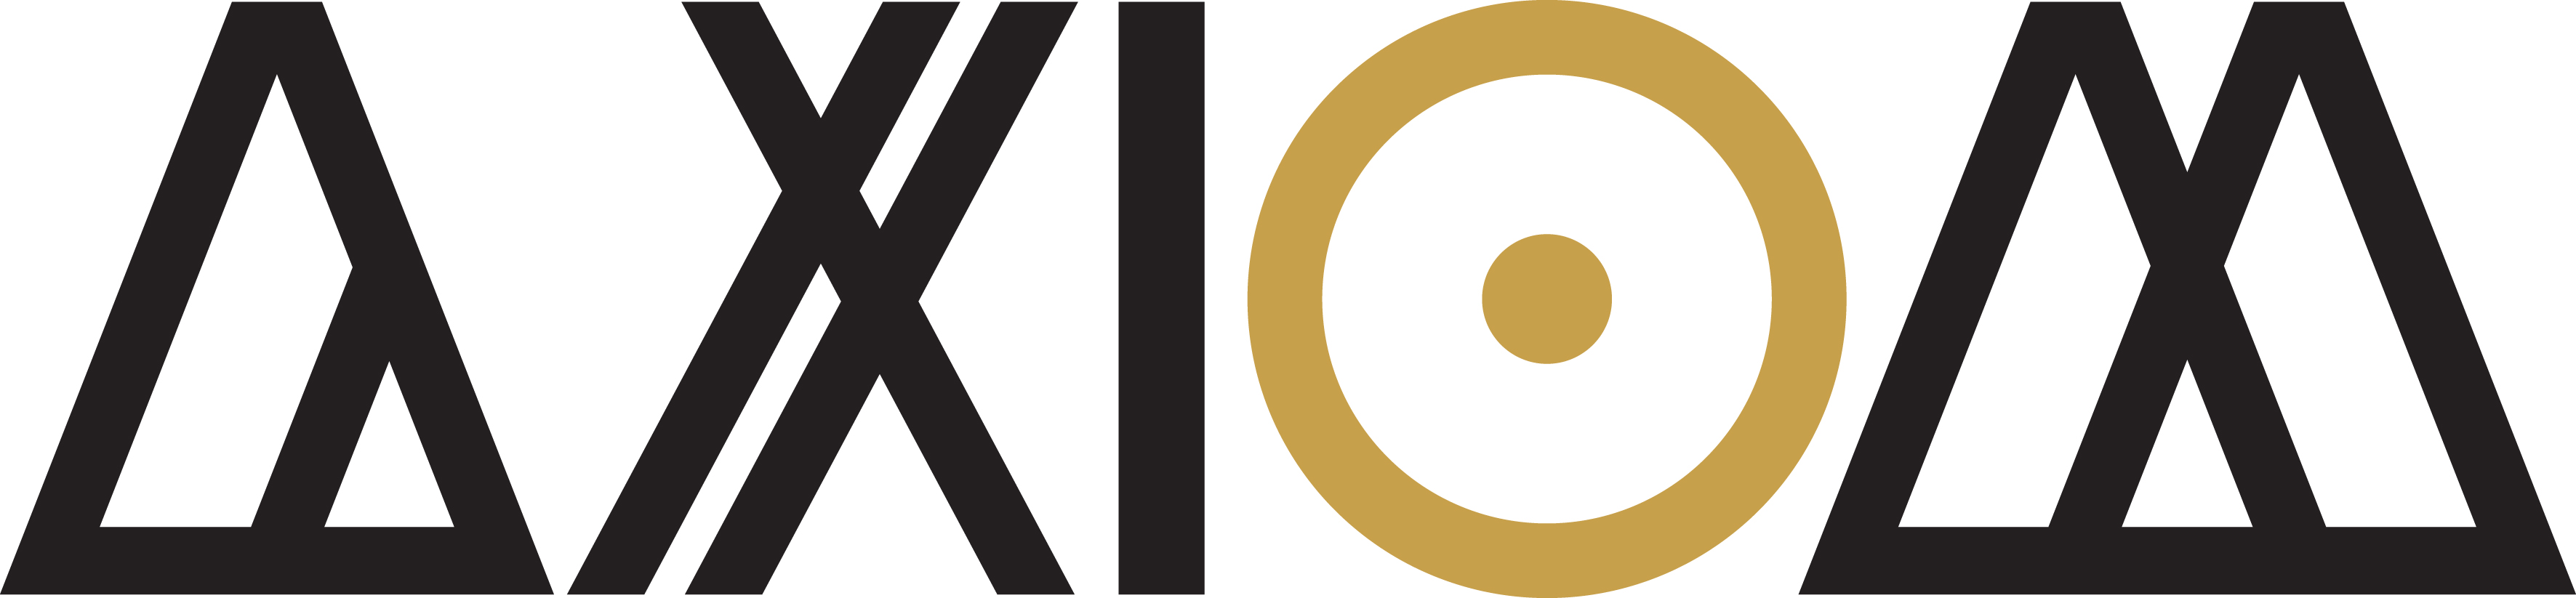 logo for Axiom Utilities Ltd